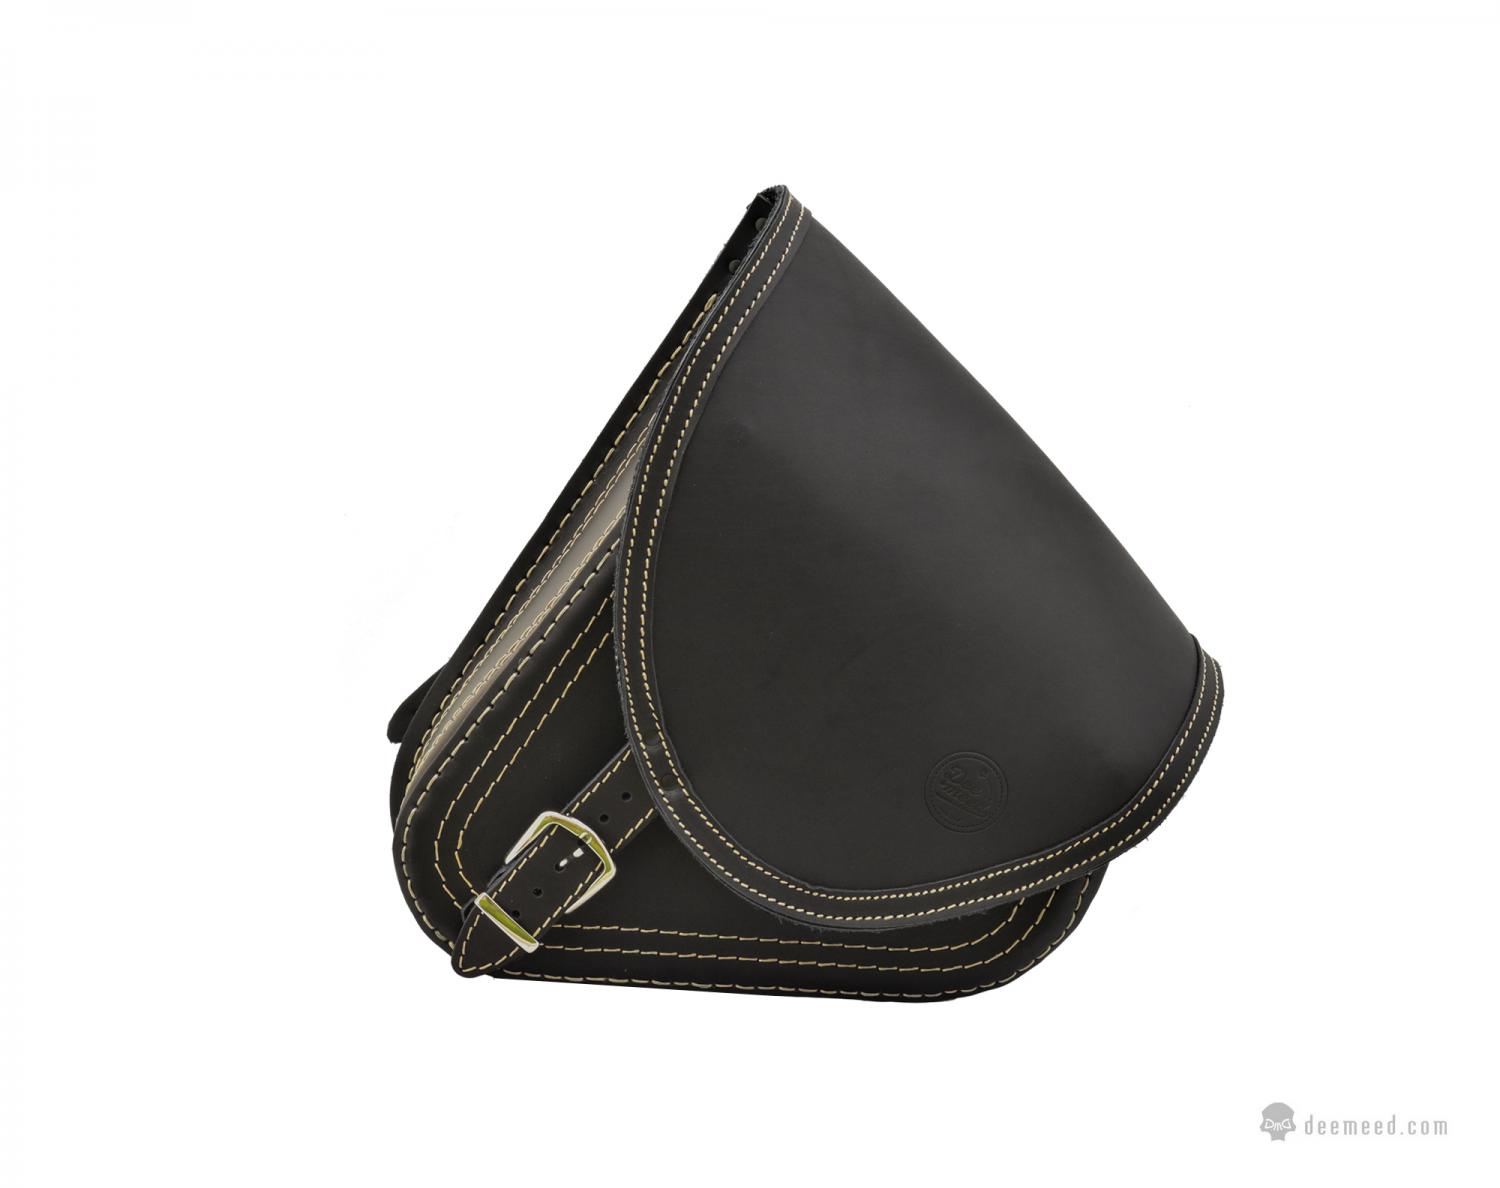 DeeMeeD Outsider Classic Swingarm Bag, Black/Ecry for HD Softail